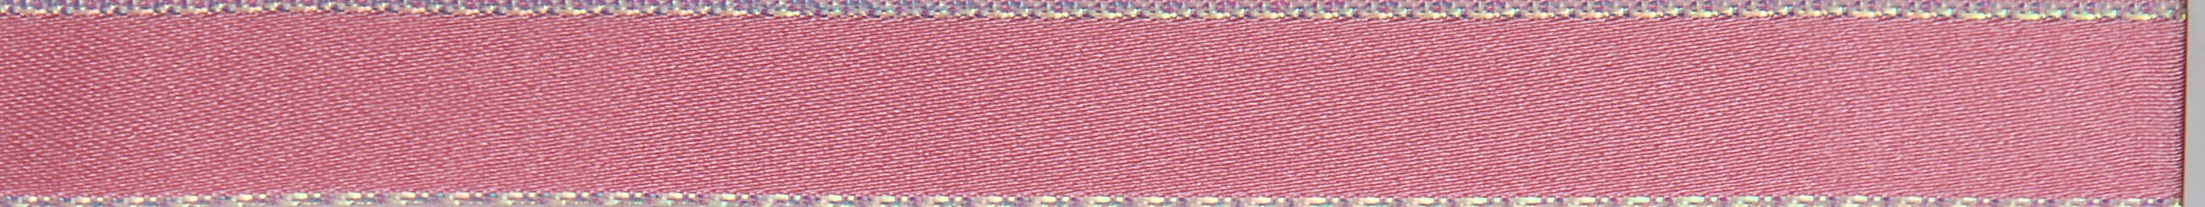 IRID EDGED SATIN 5MM X 20M 1 Pink